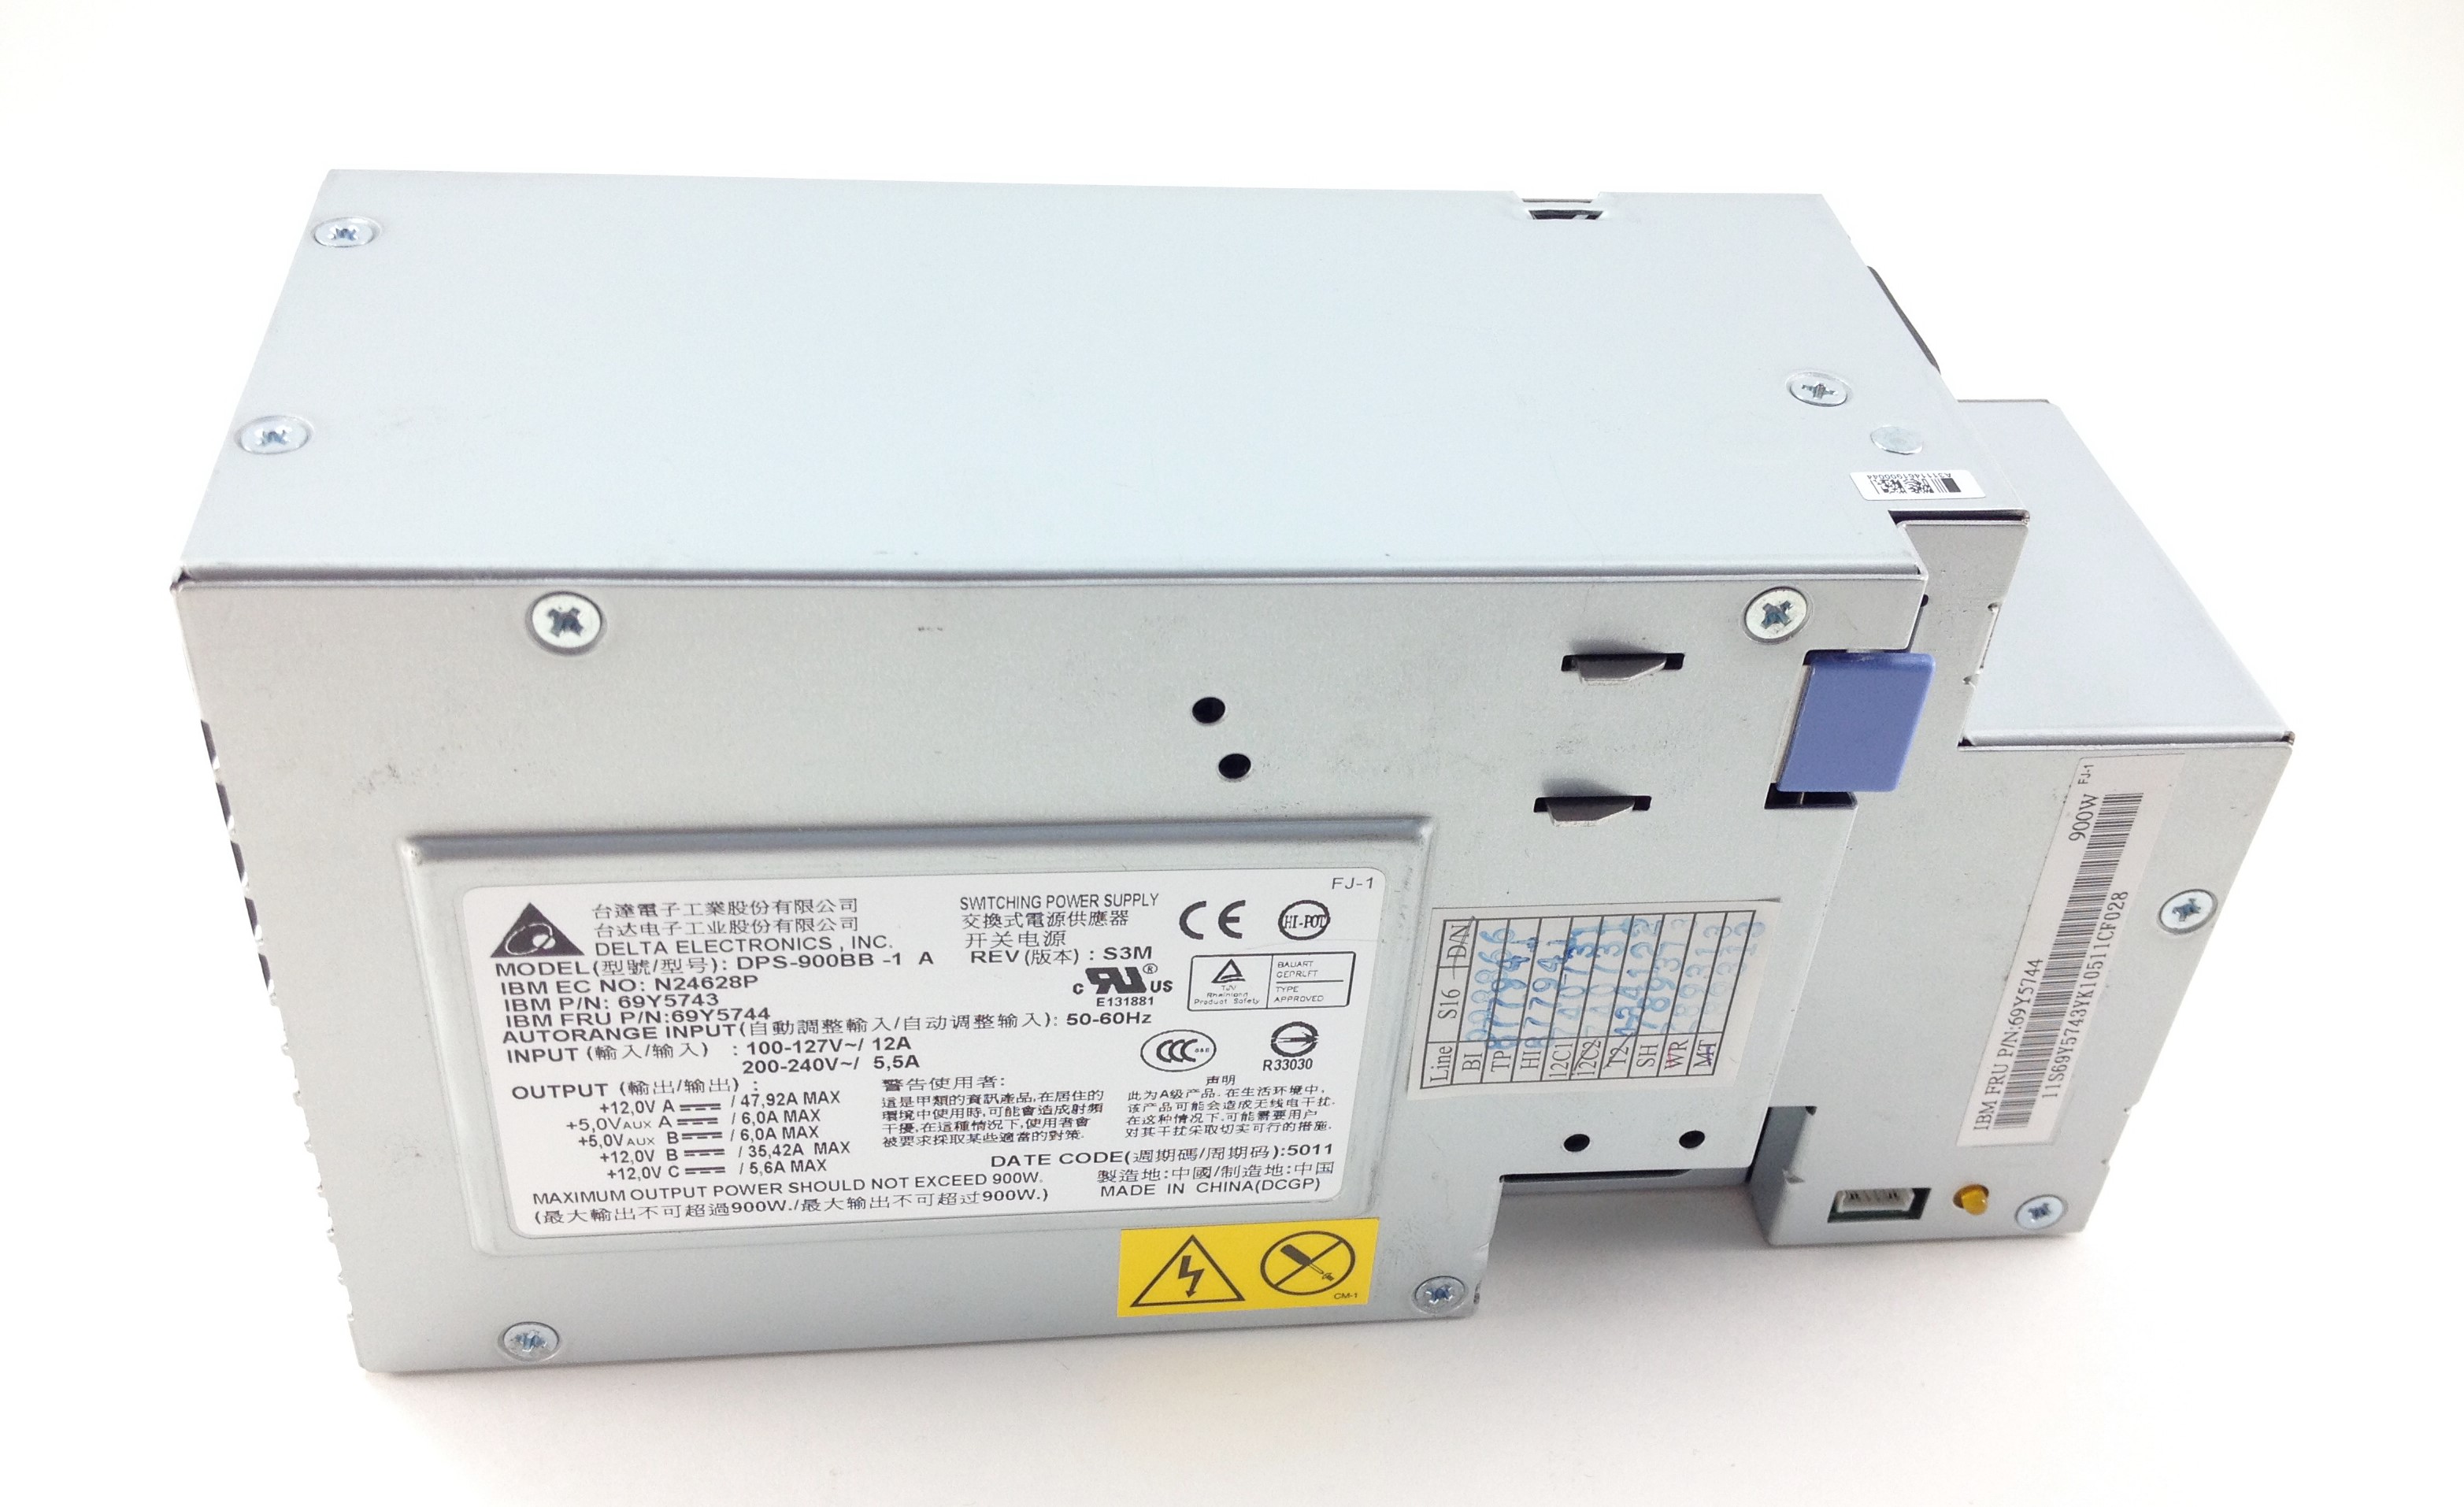 IBM System X Idataplex Dx360 M3 900W Power Supply (69Y5744)